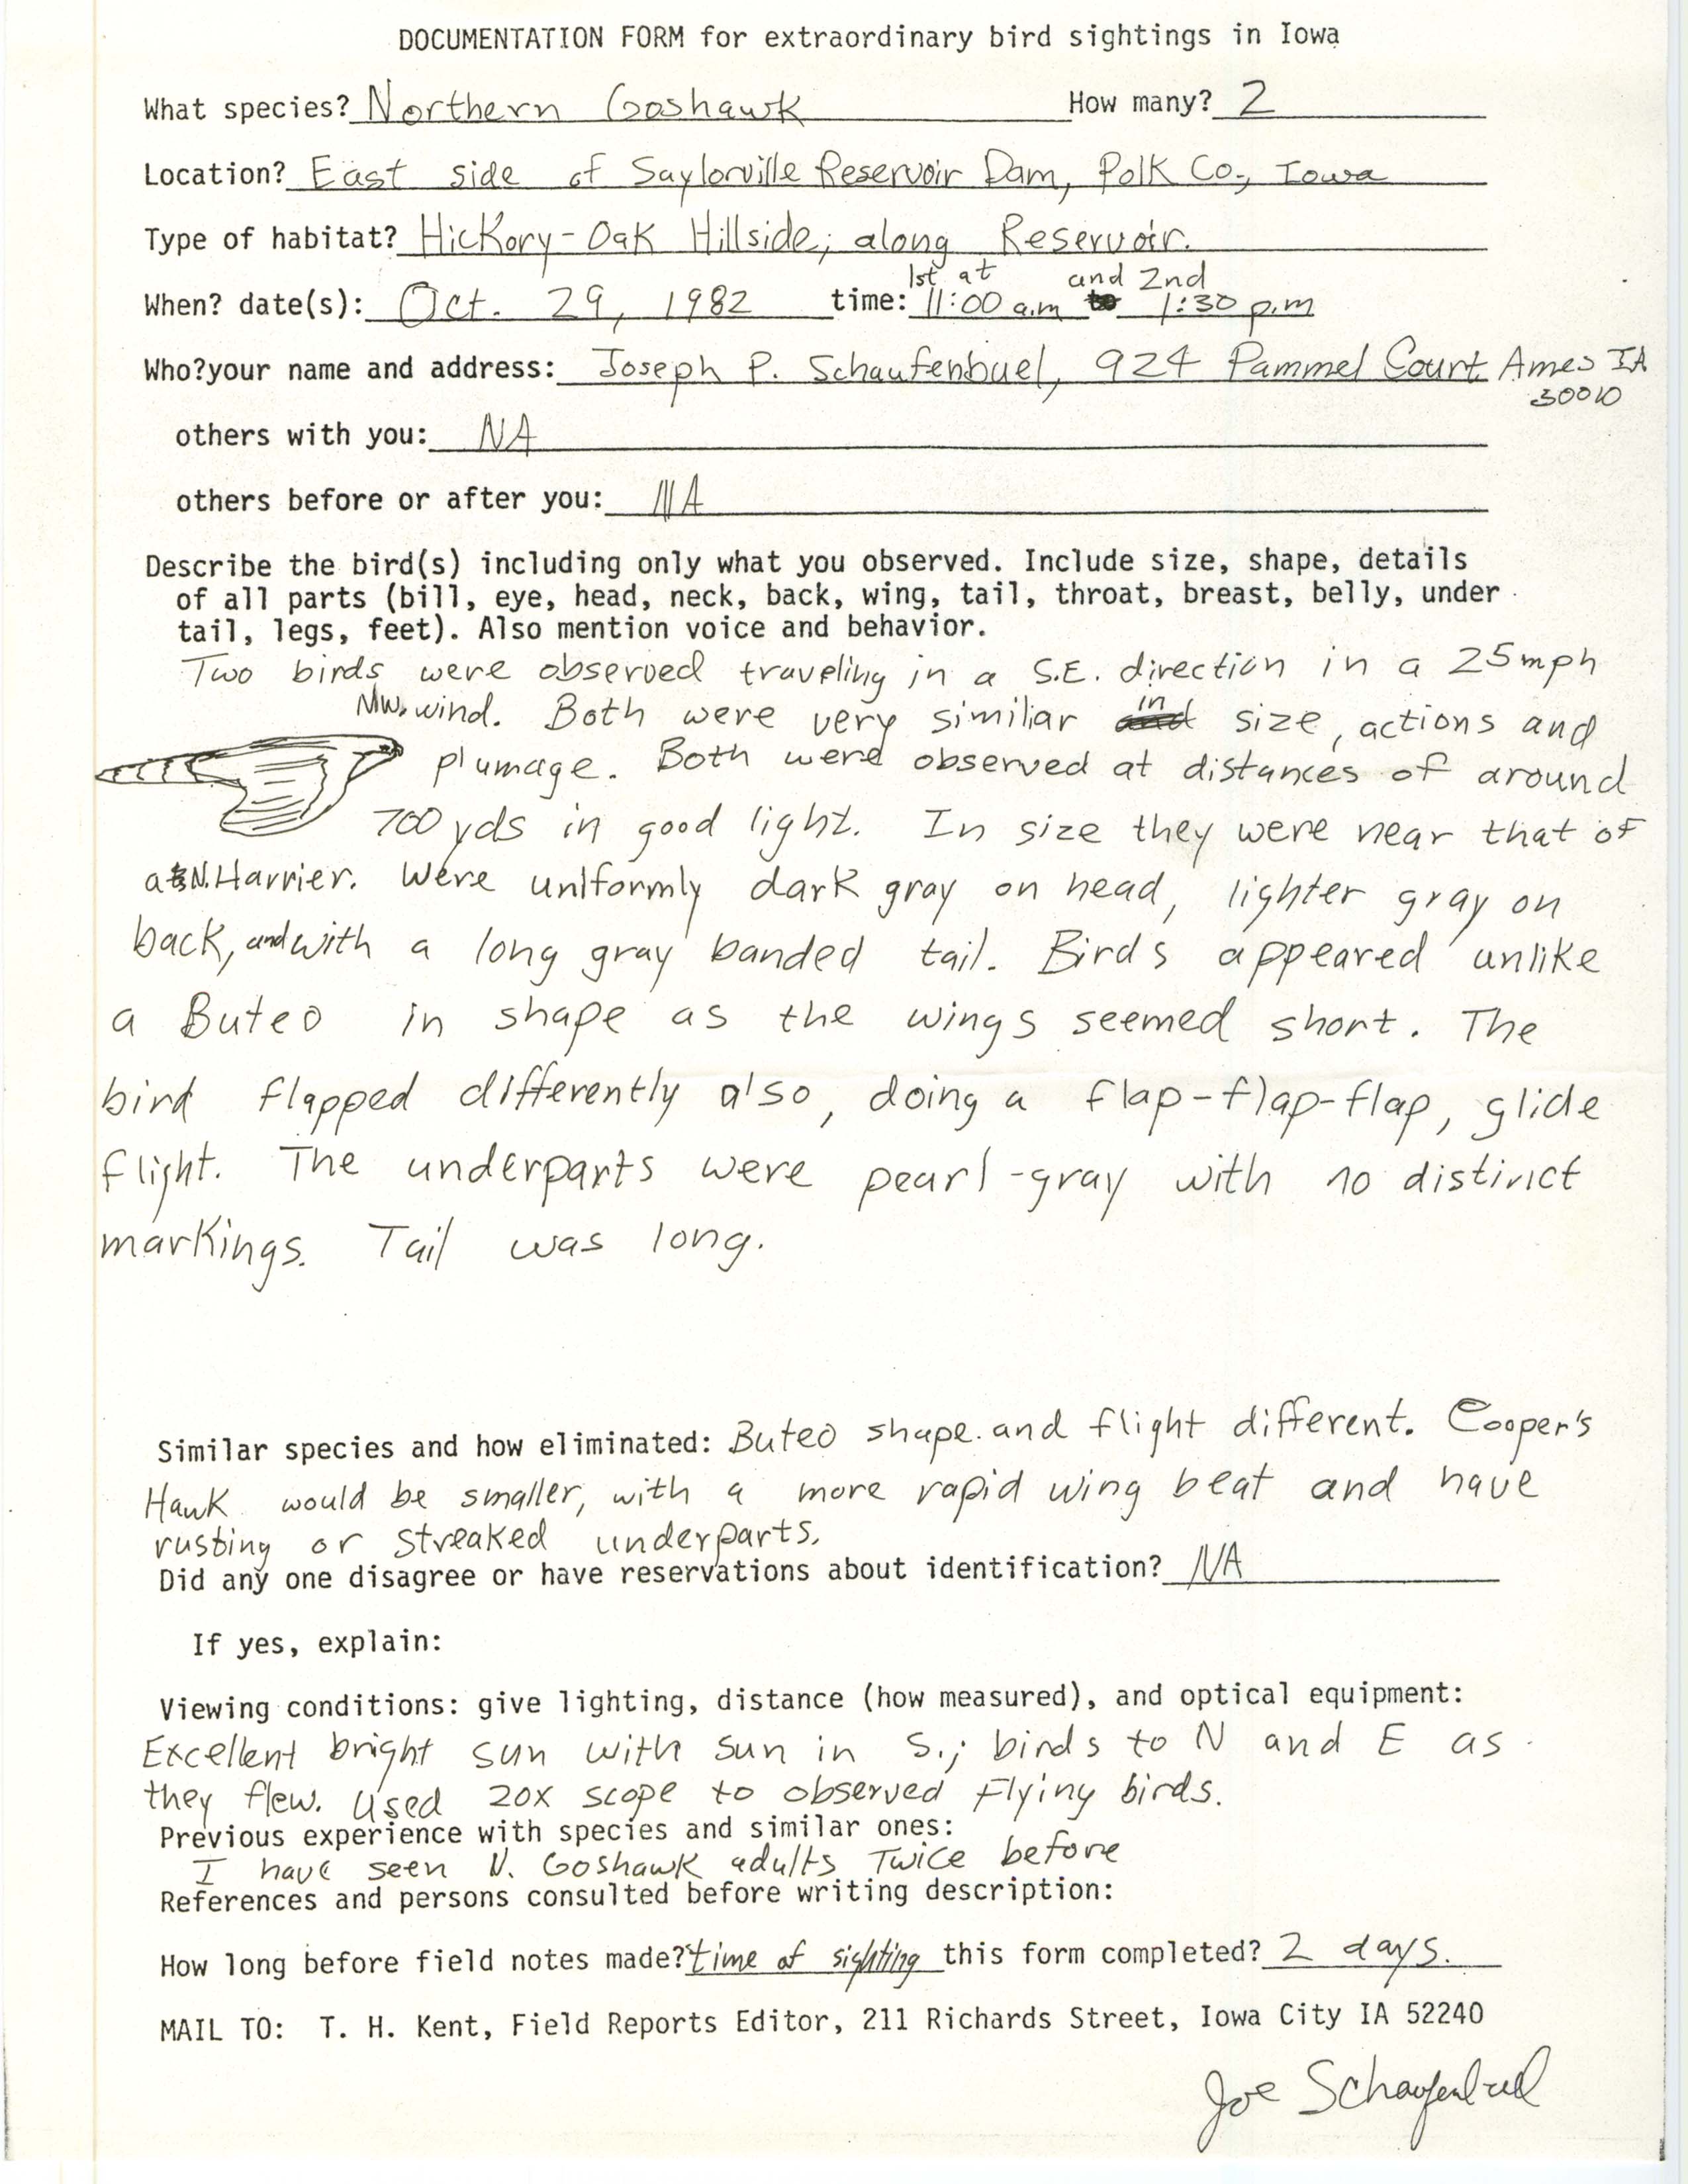 Rare bird documentation form for Northern Goshawk at Saylorville Reservoir Dam, 1982